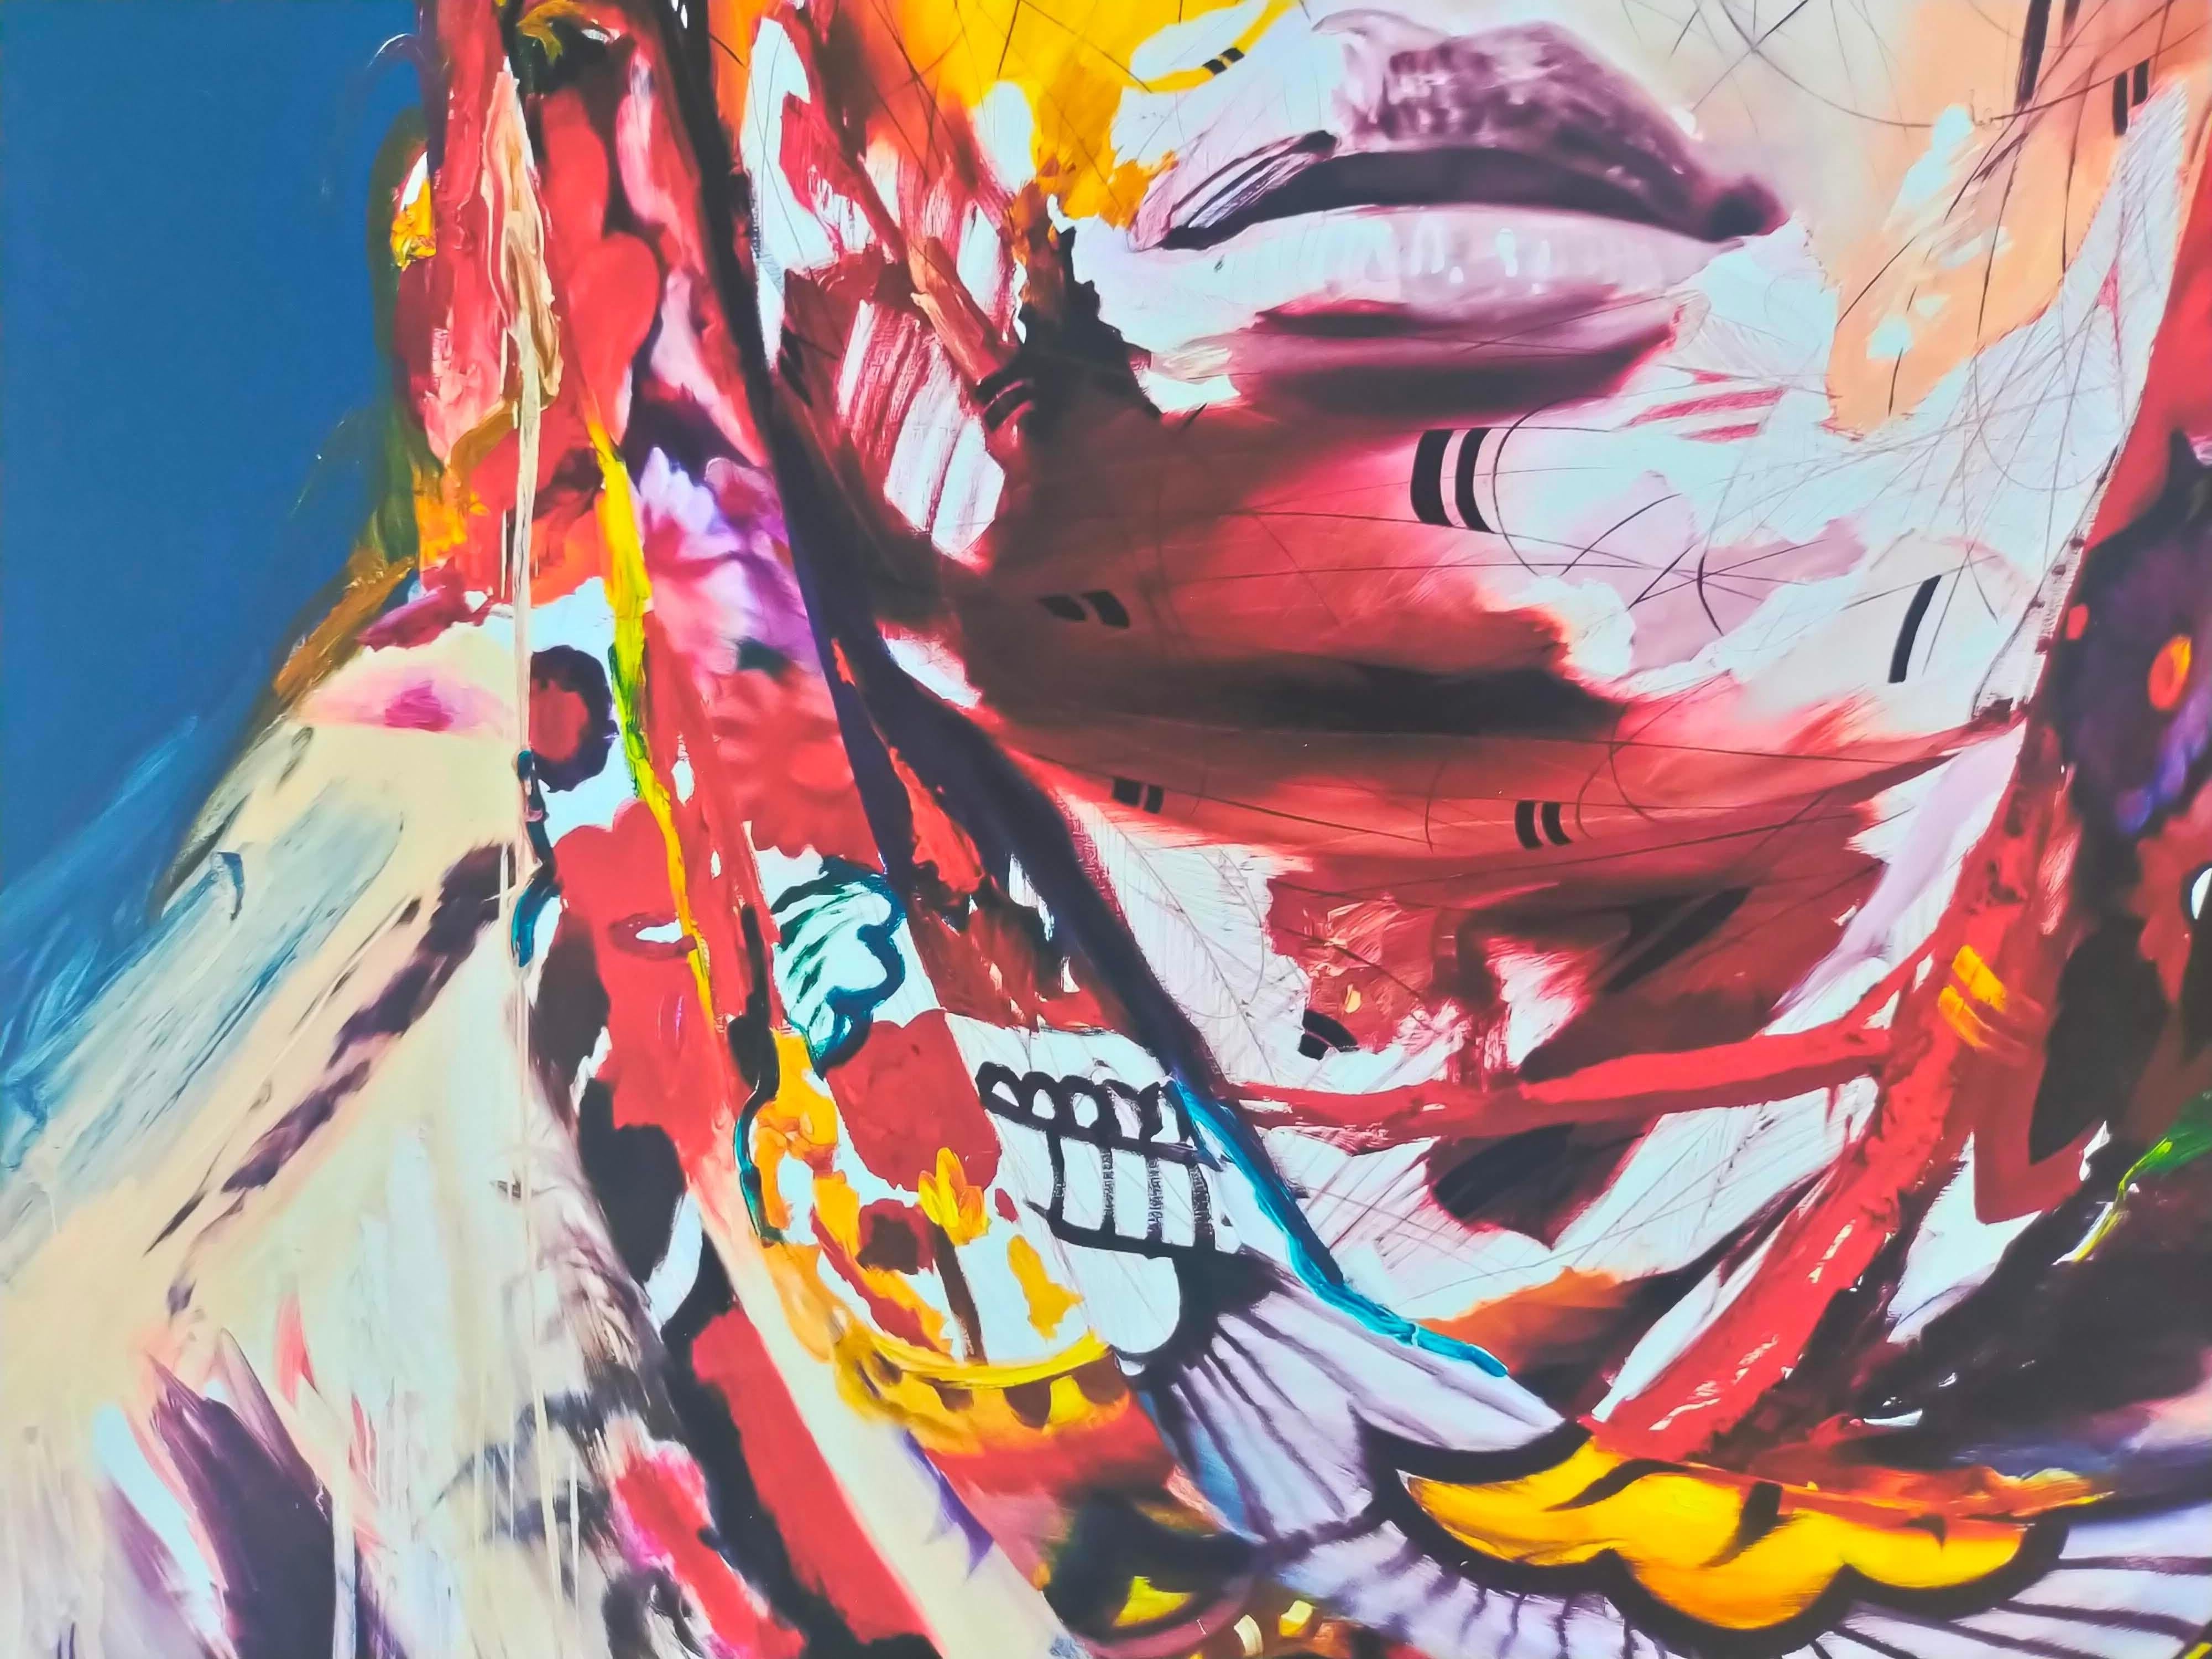 Tirage sur papier d'Art Sommerset 330 g pur coton sans acide  Edition Numérotée et signée

Born in 1989, Alexandre Monteiro aka Hopare is a Paris-based growing figure of the street art scene. He discovered street art when he was around 12 years old